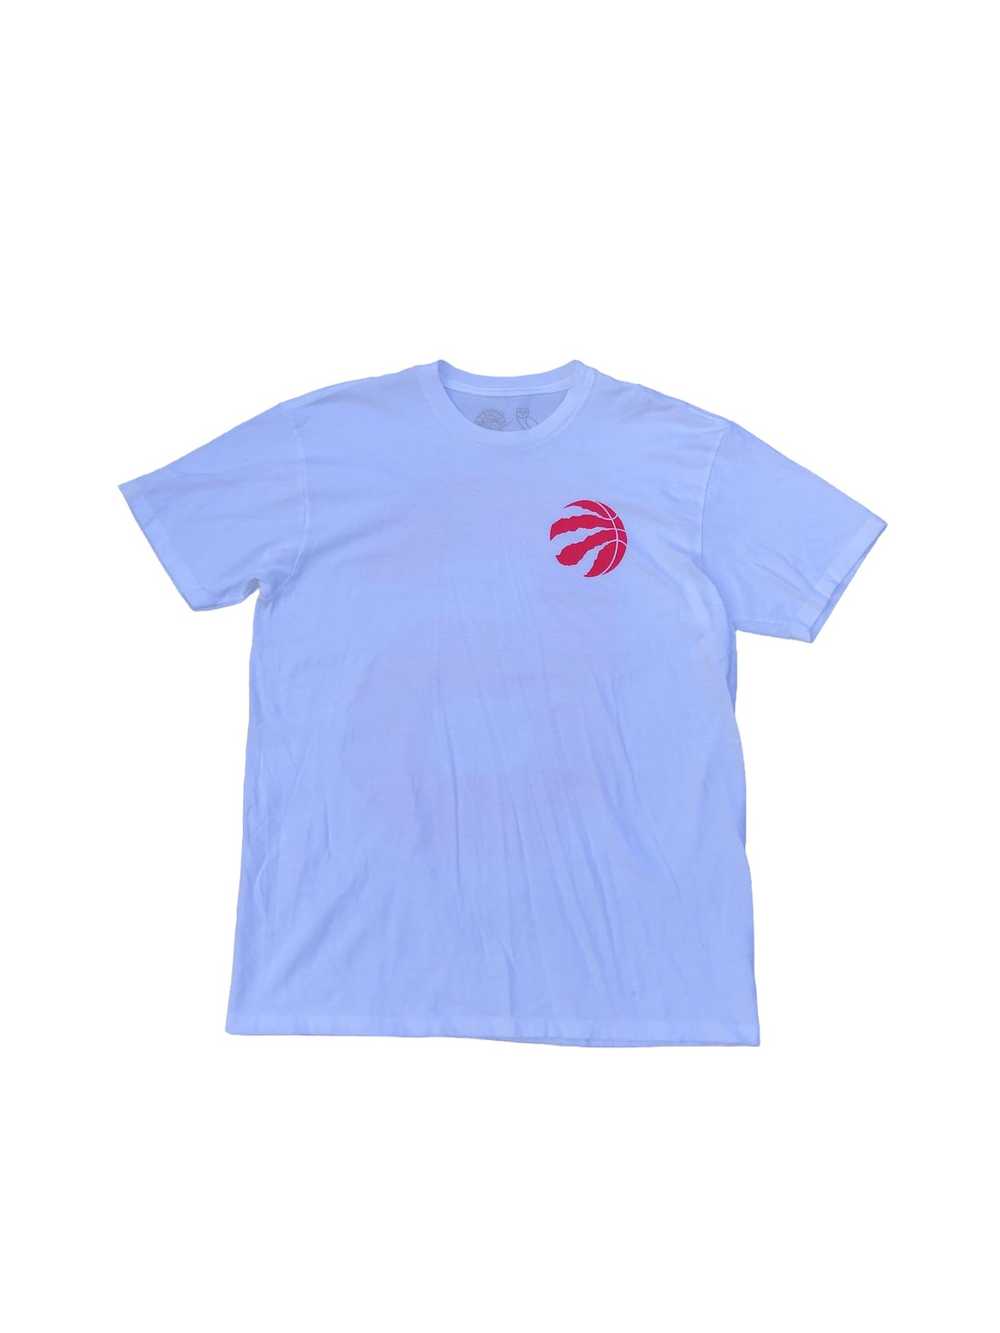 FreekyP x Frankie Toronto Raptors Starting 5 T-Shirts